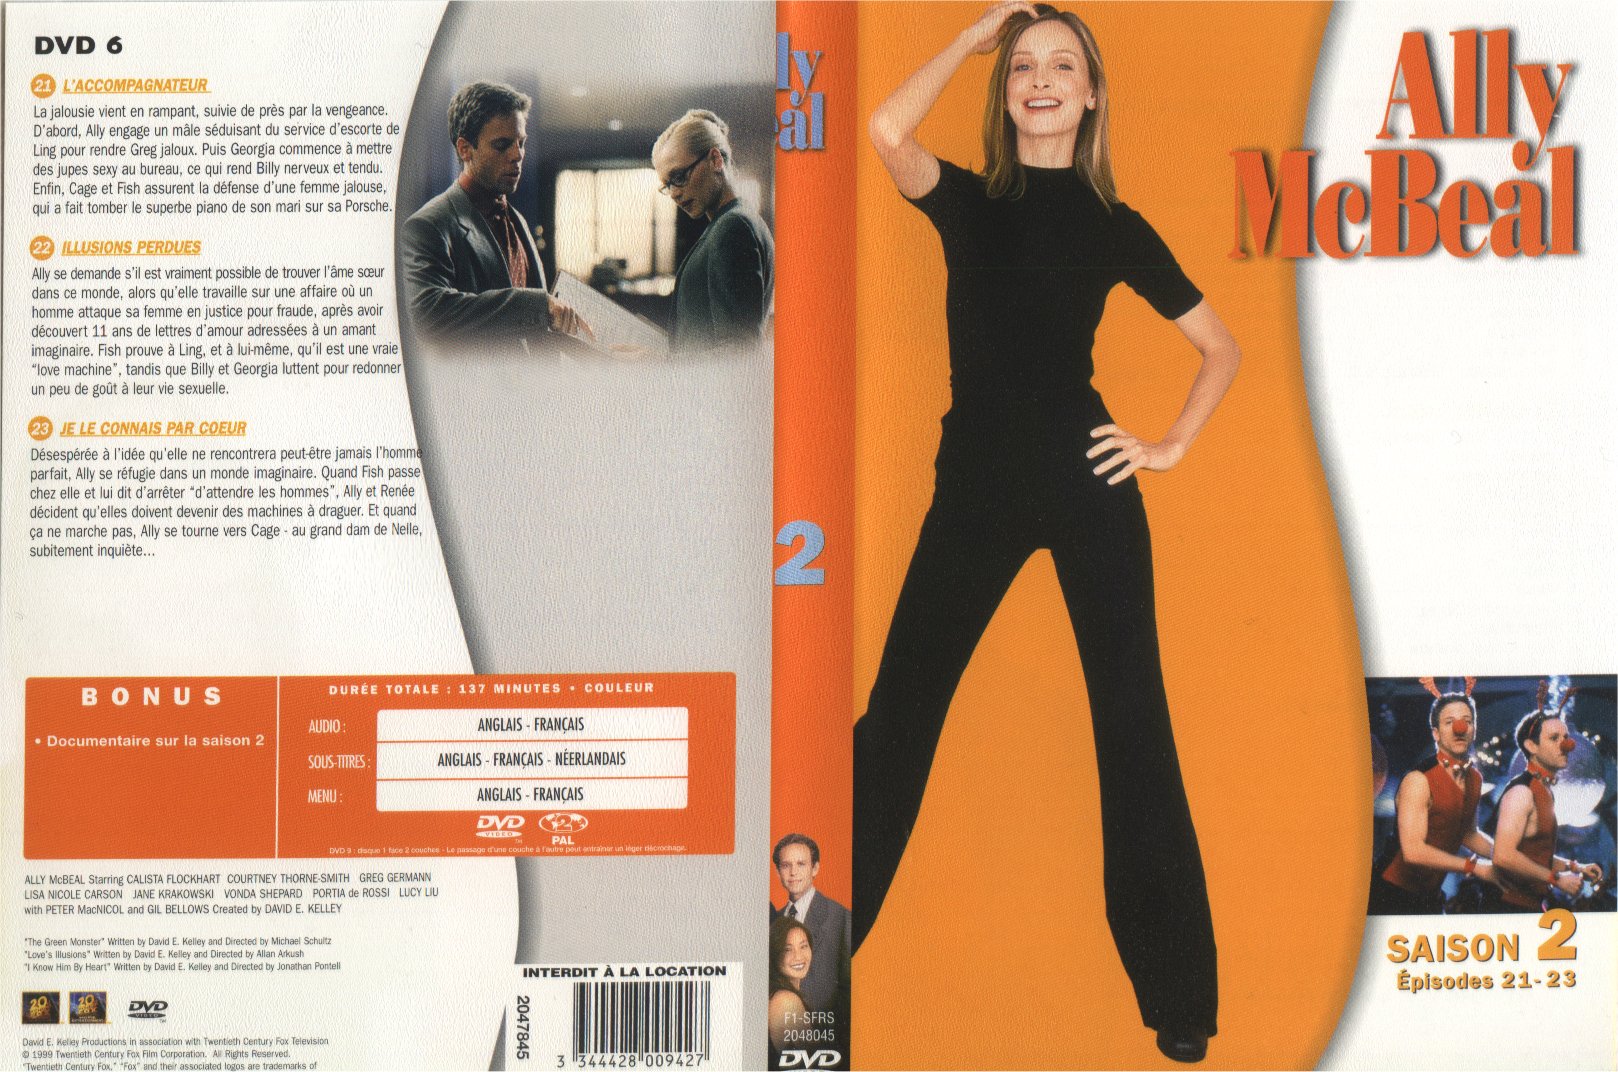 Jaquette DVD Ally McBeal saison 2 dvd 6